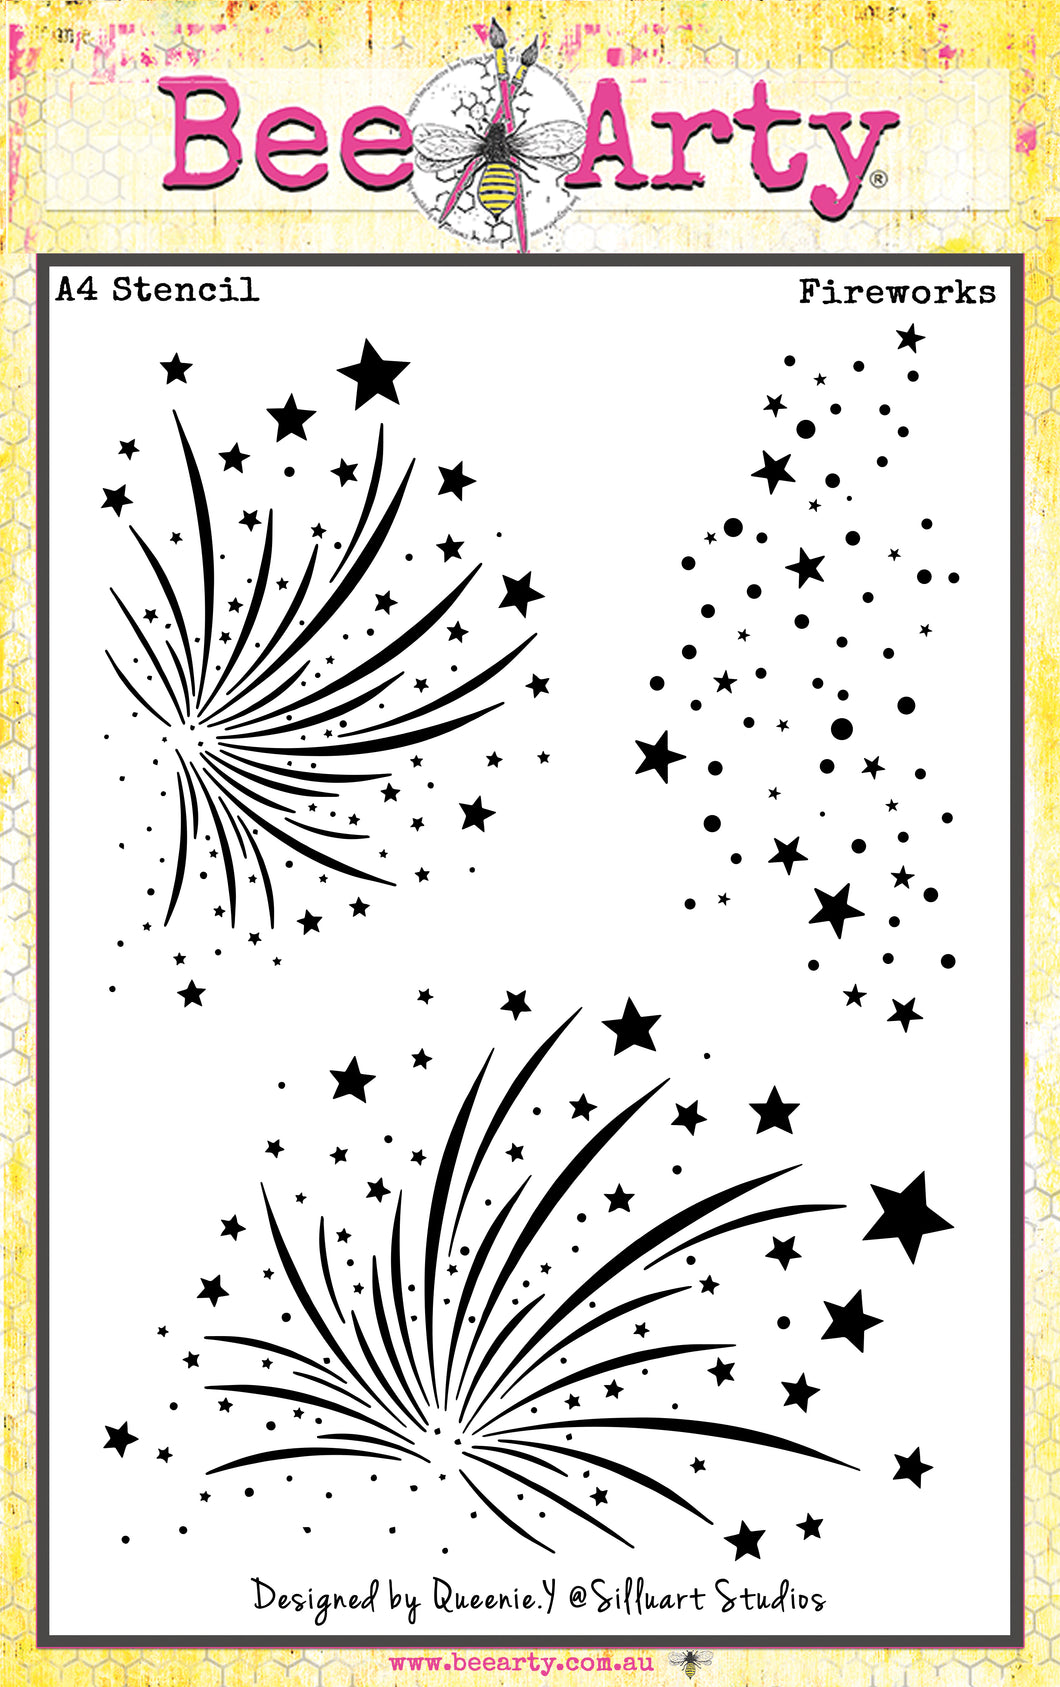 Fireworks - A4 Stencil